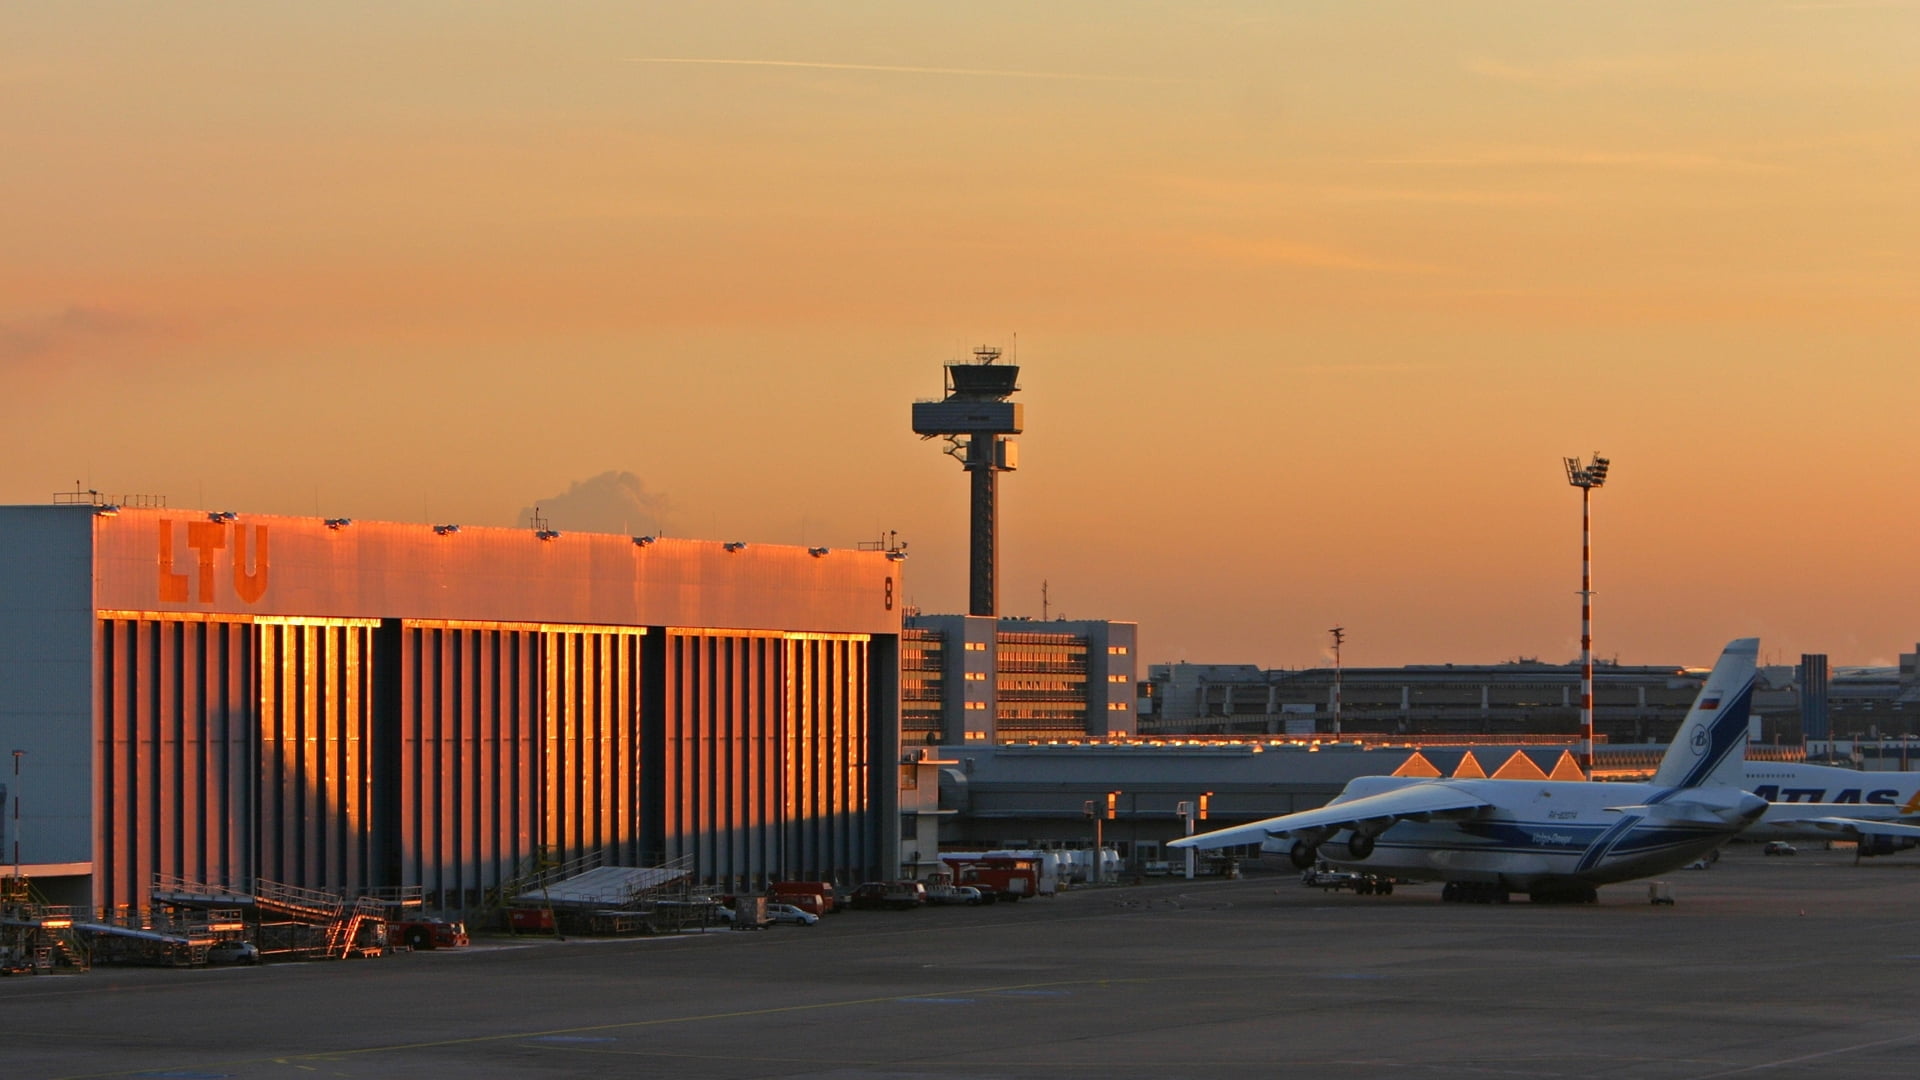 Airport building photo in golden hour